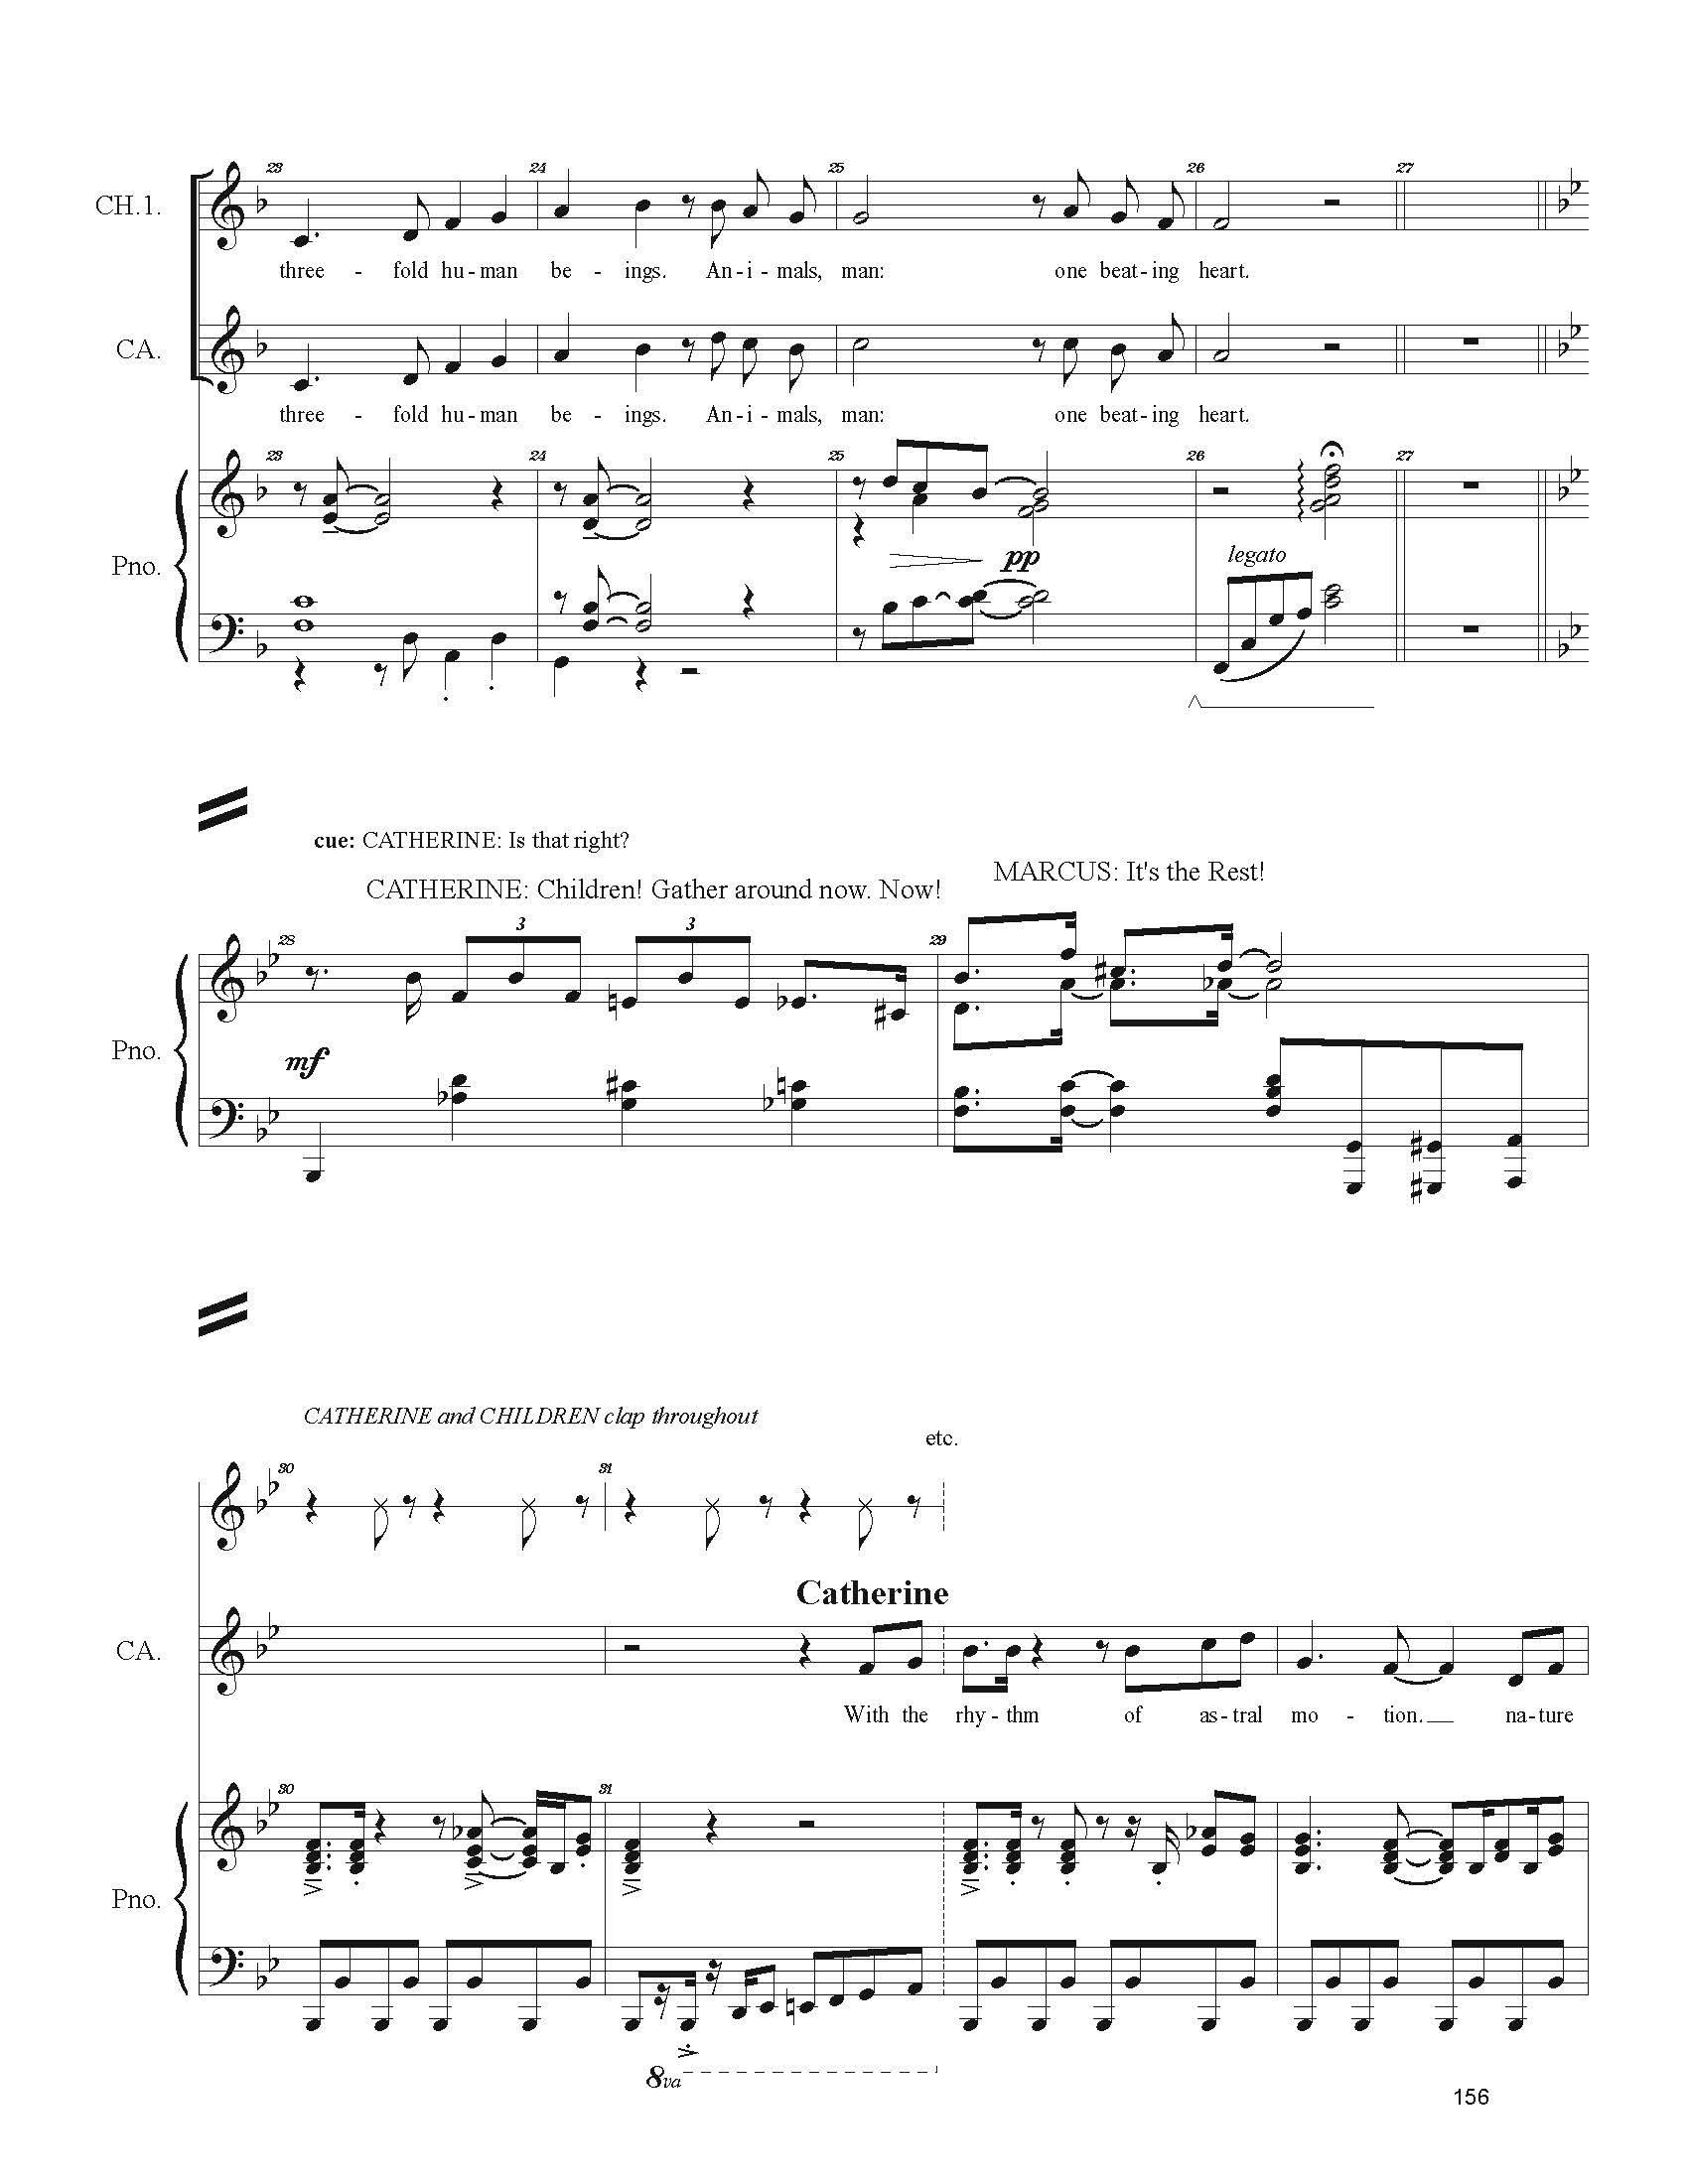 FULL PIANO VOCAL SCORE DRAFT 1 - Score_Page_156.jpg